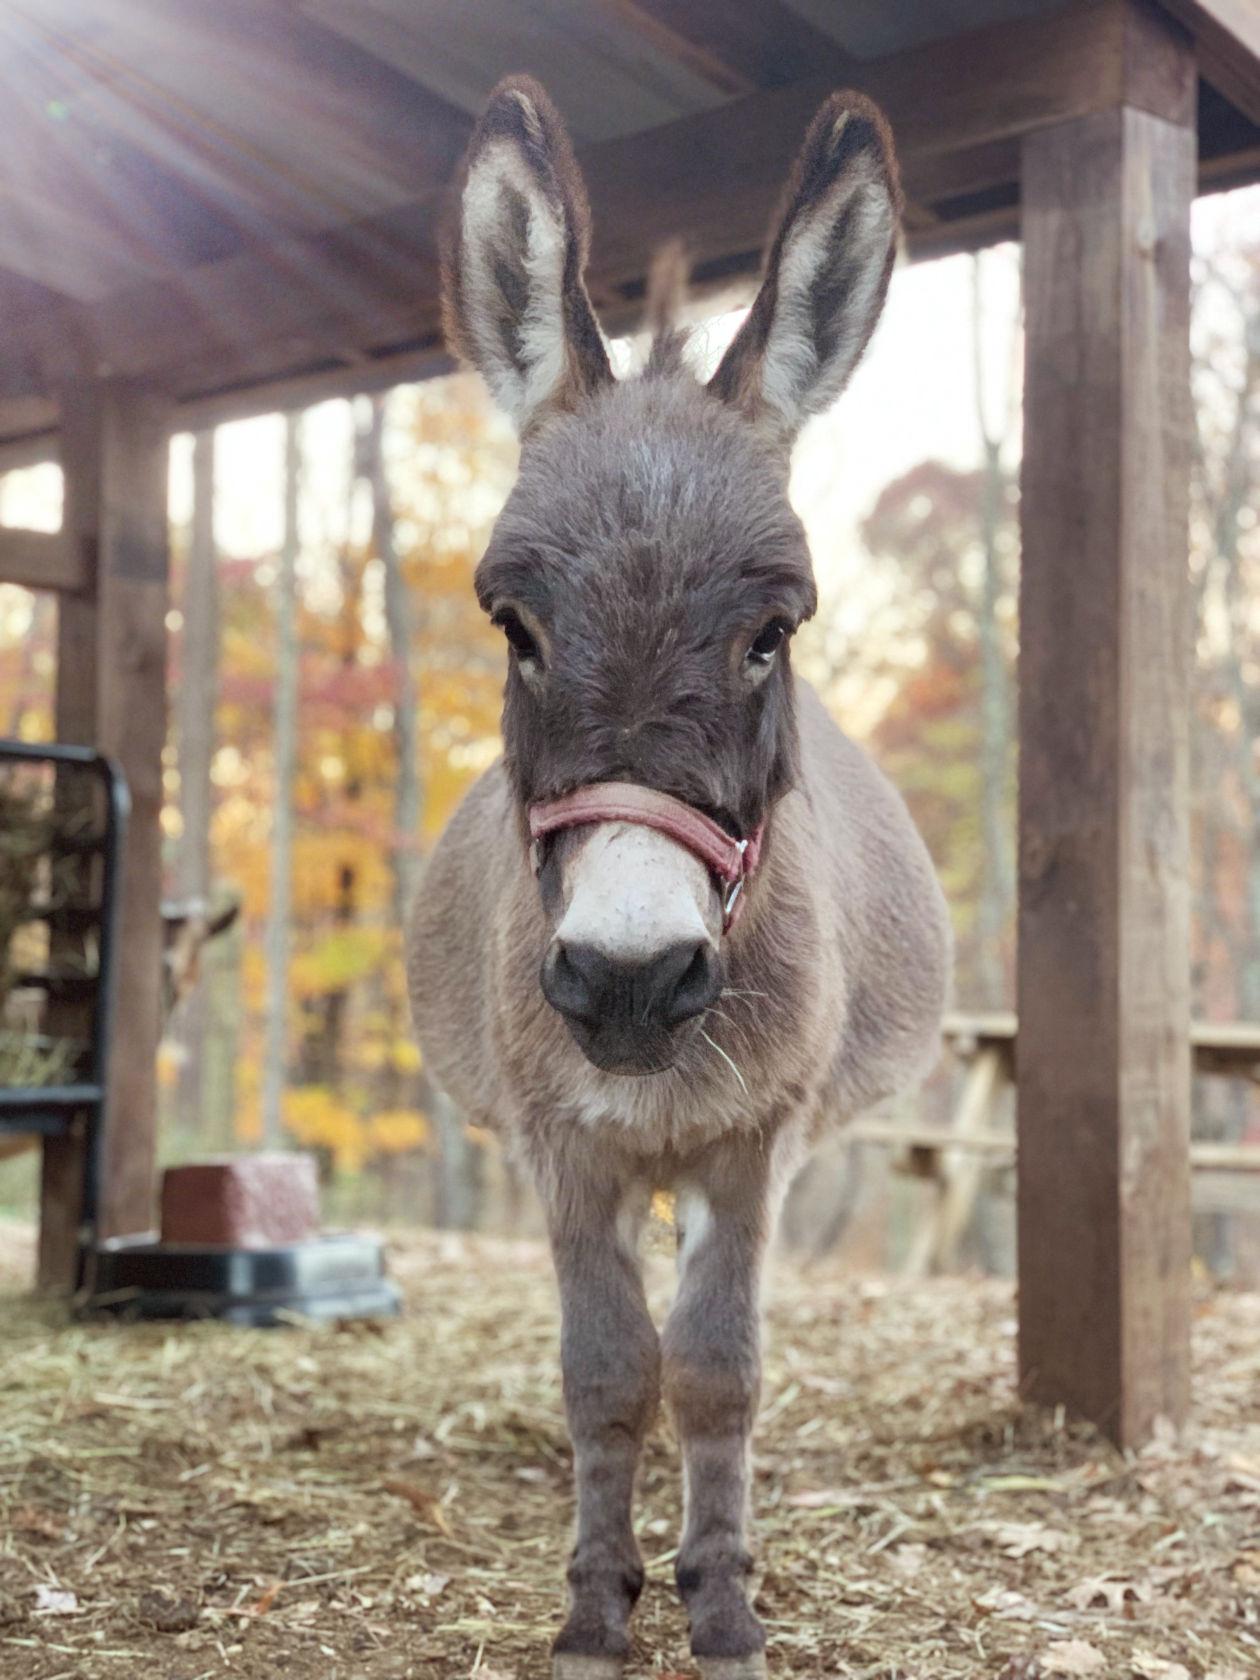 donkey at the barn